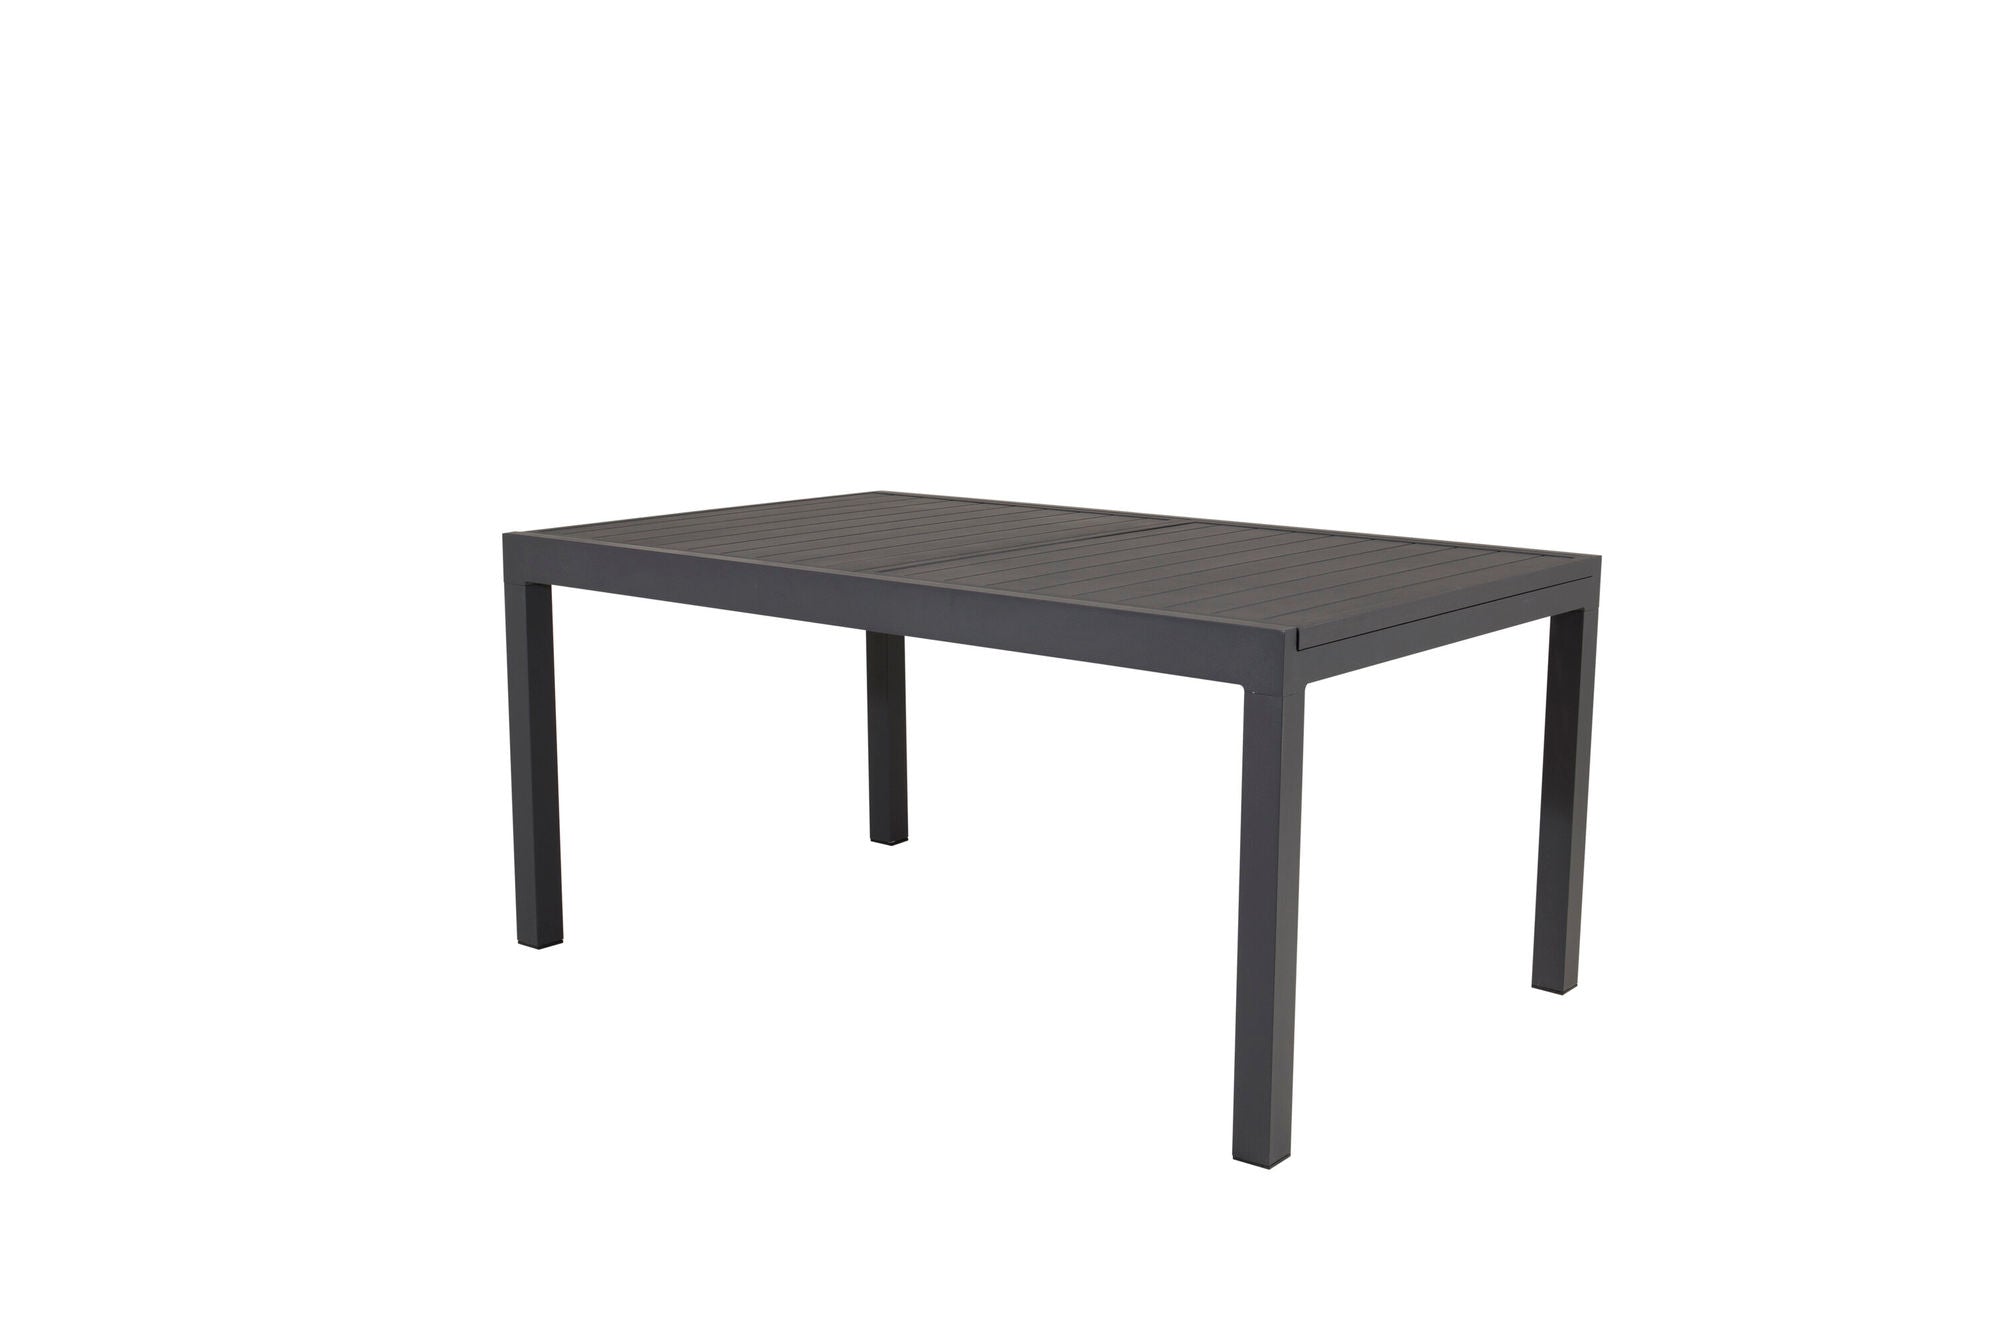 Venture Home Marbella Table 160/240 - Black/Black extendable